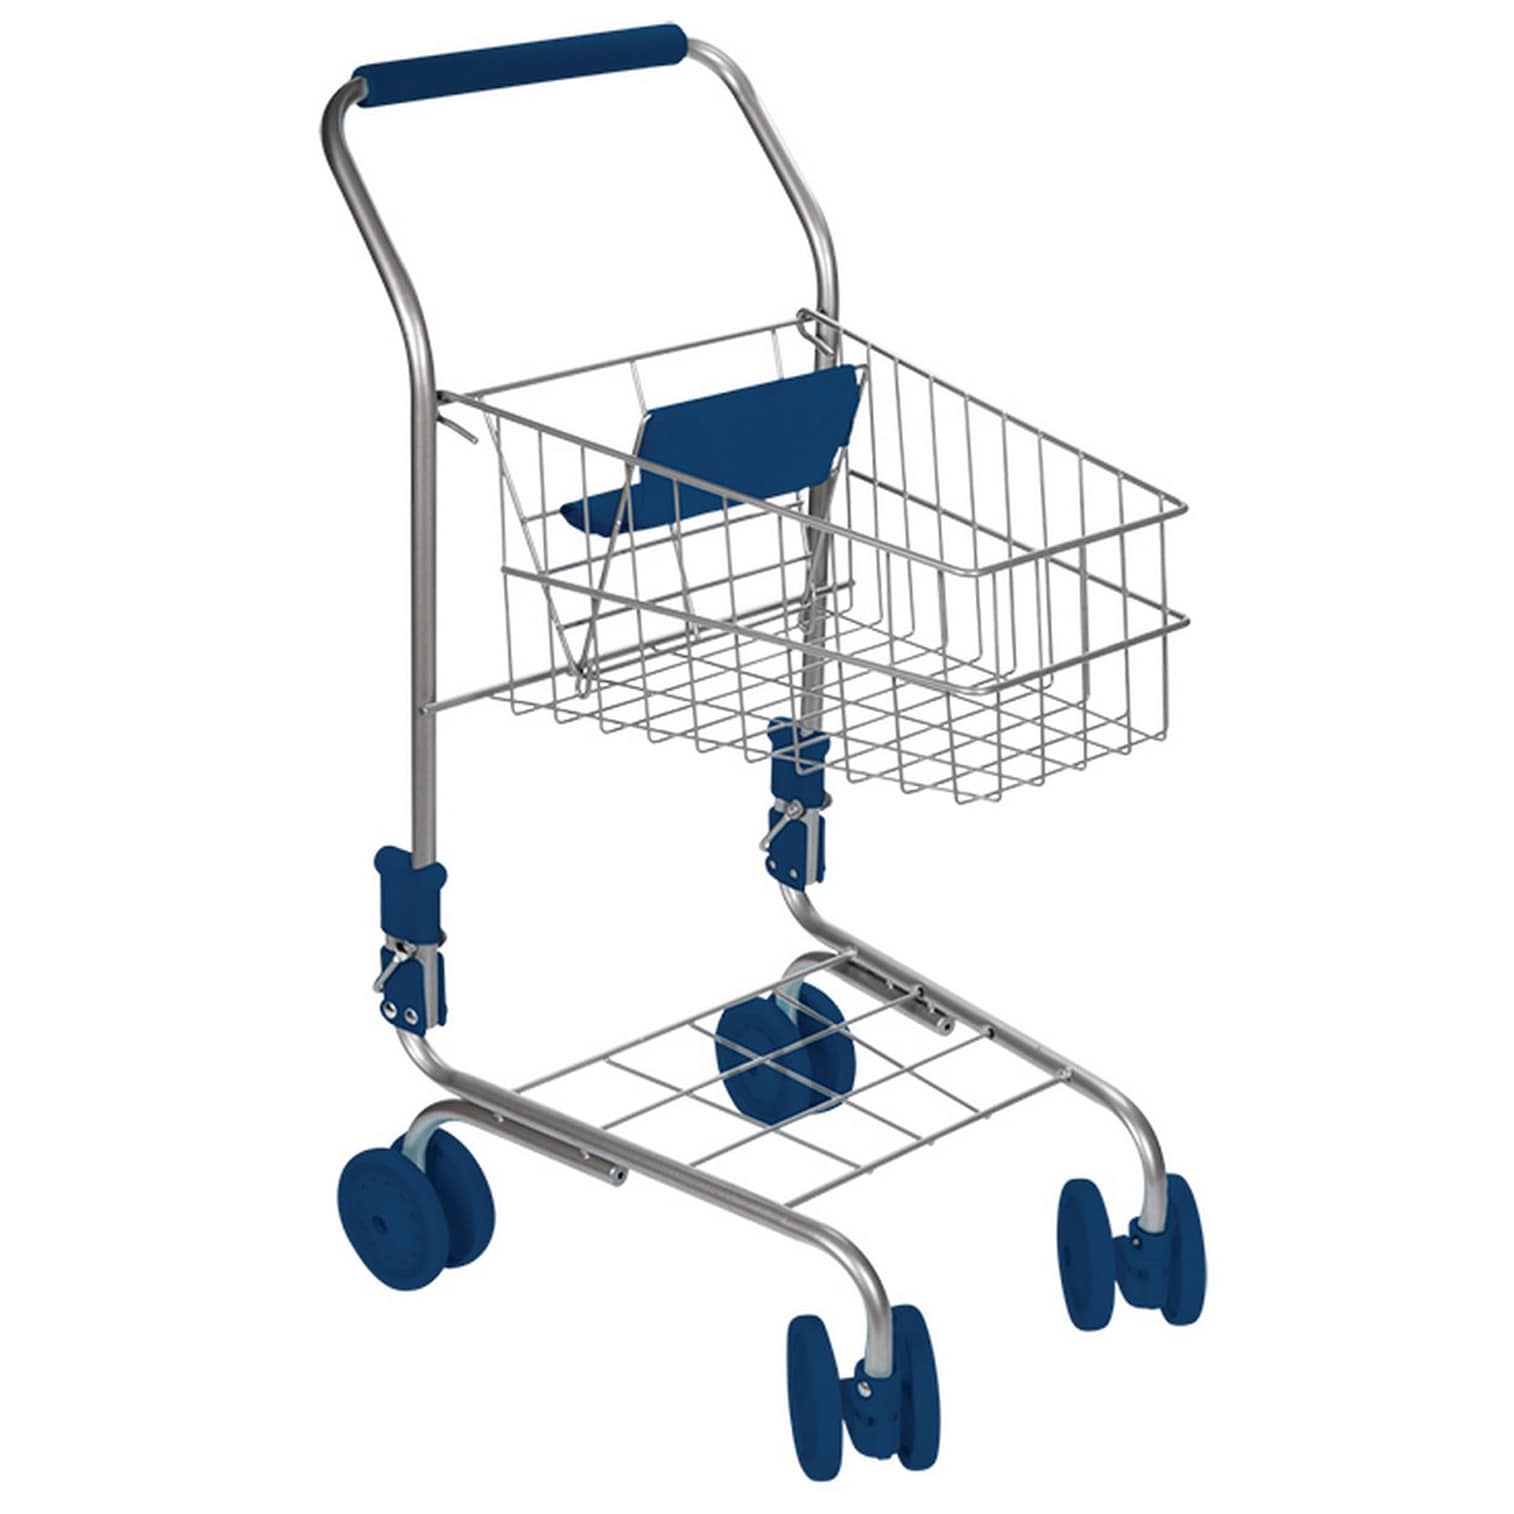 melissa and doug metal shopping cart